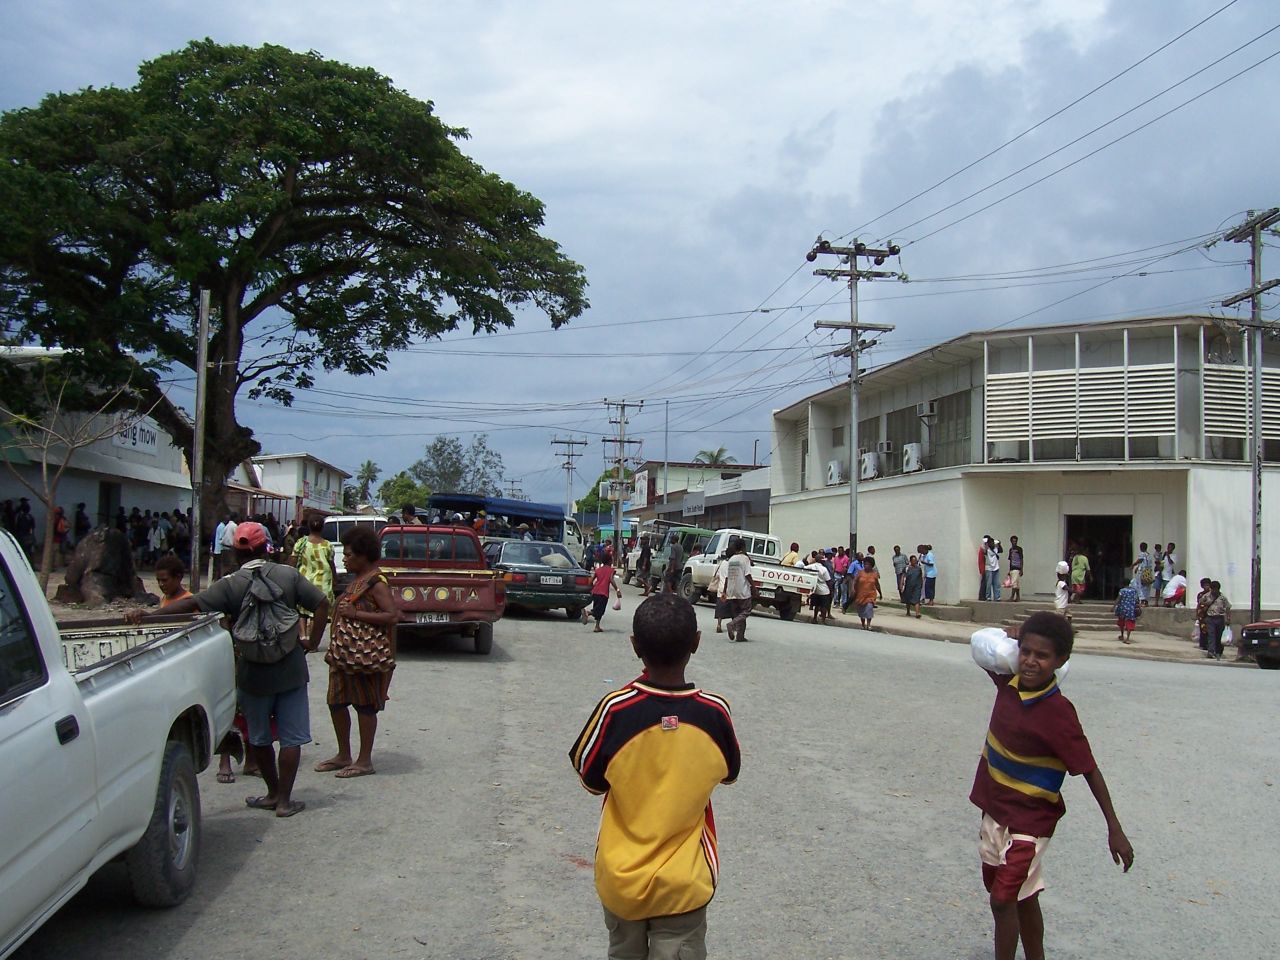 children walking on the street near many vehicles and trucks